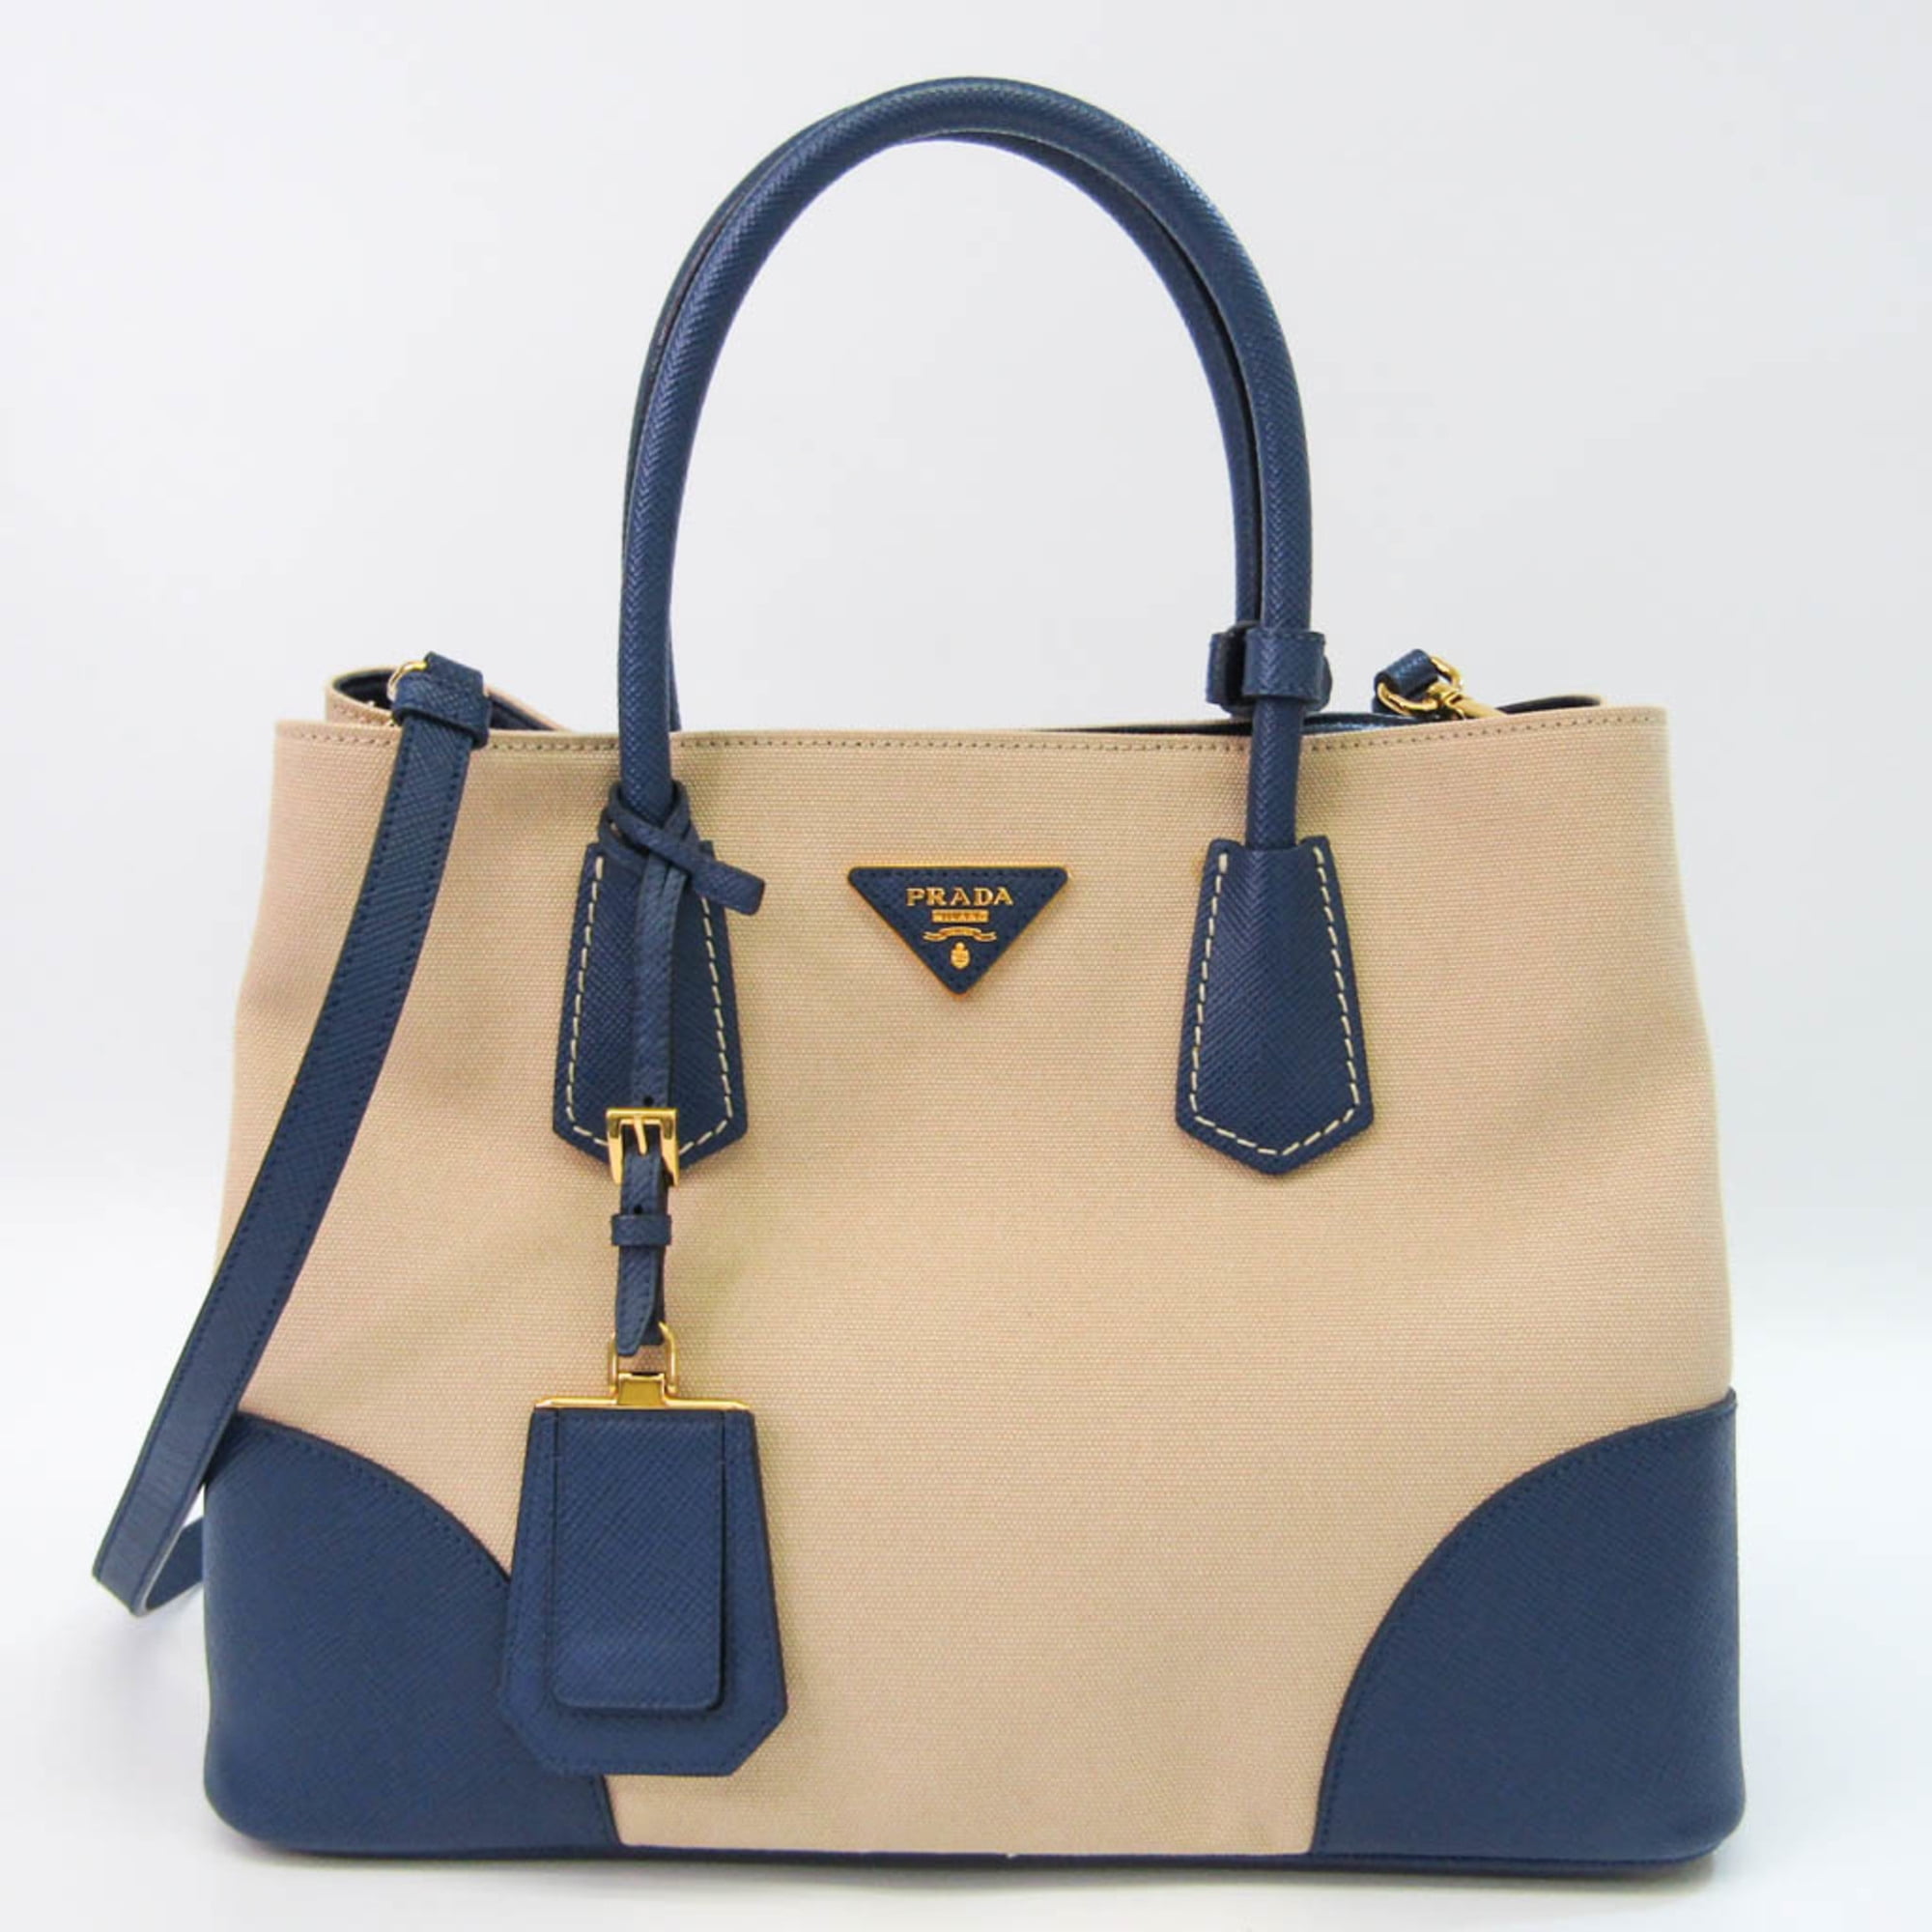 Prada Women's Saffiano Double Handbag